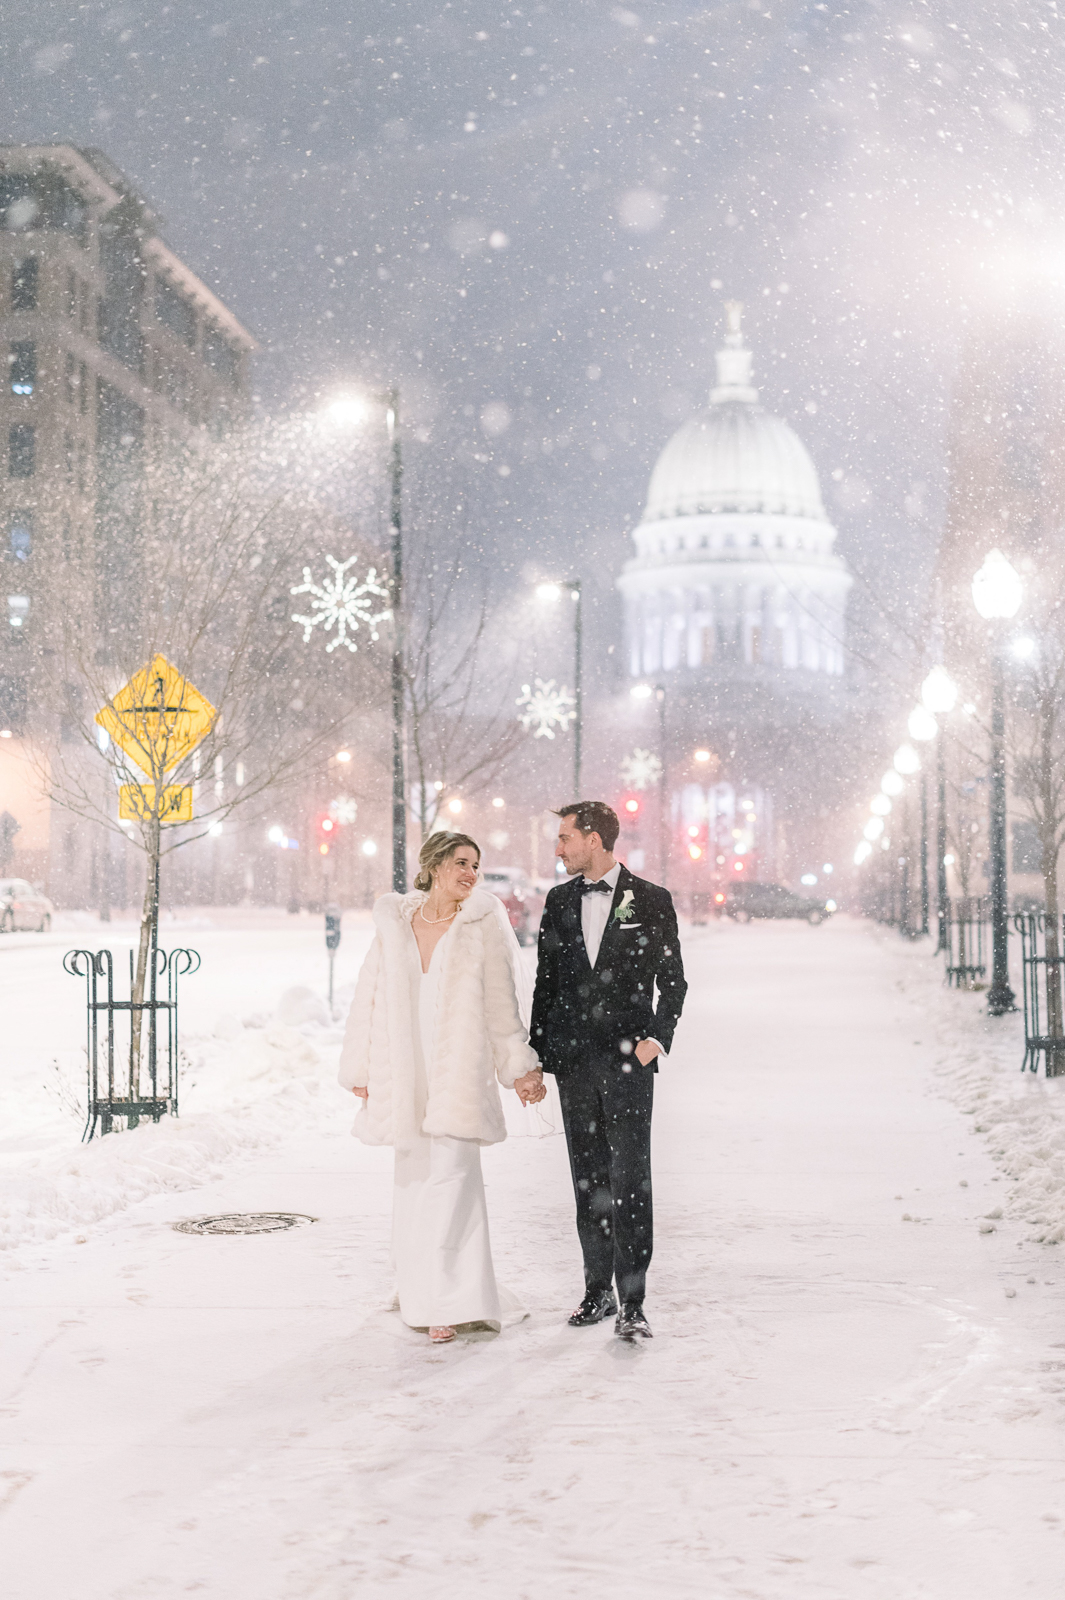 Stunning Winter Wedding Photo